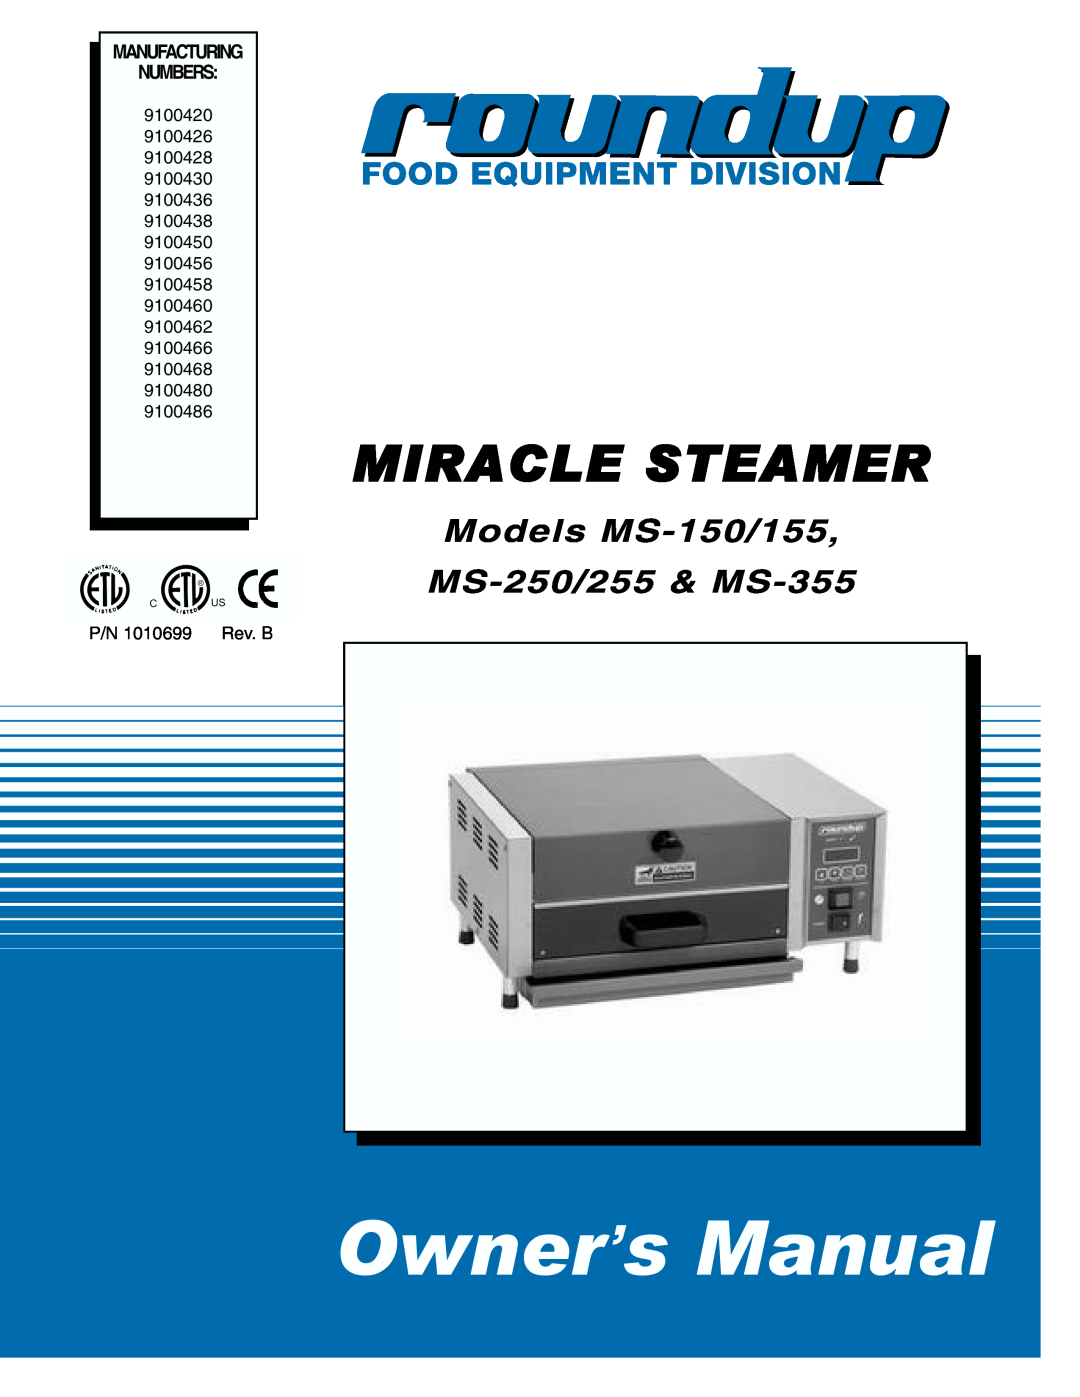 Antunes, AJ owner manual Miracle Steamer, Models MS-150/155 MS-250/255 & MS-355, Manufacturing Numbers 